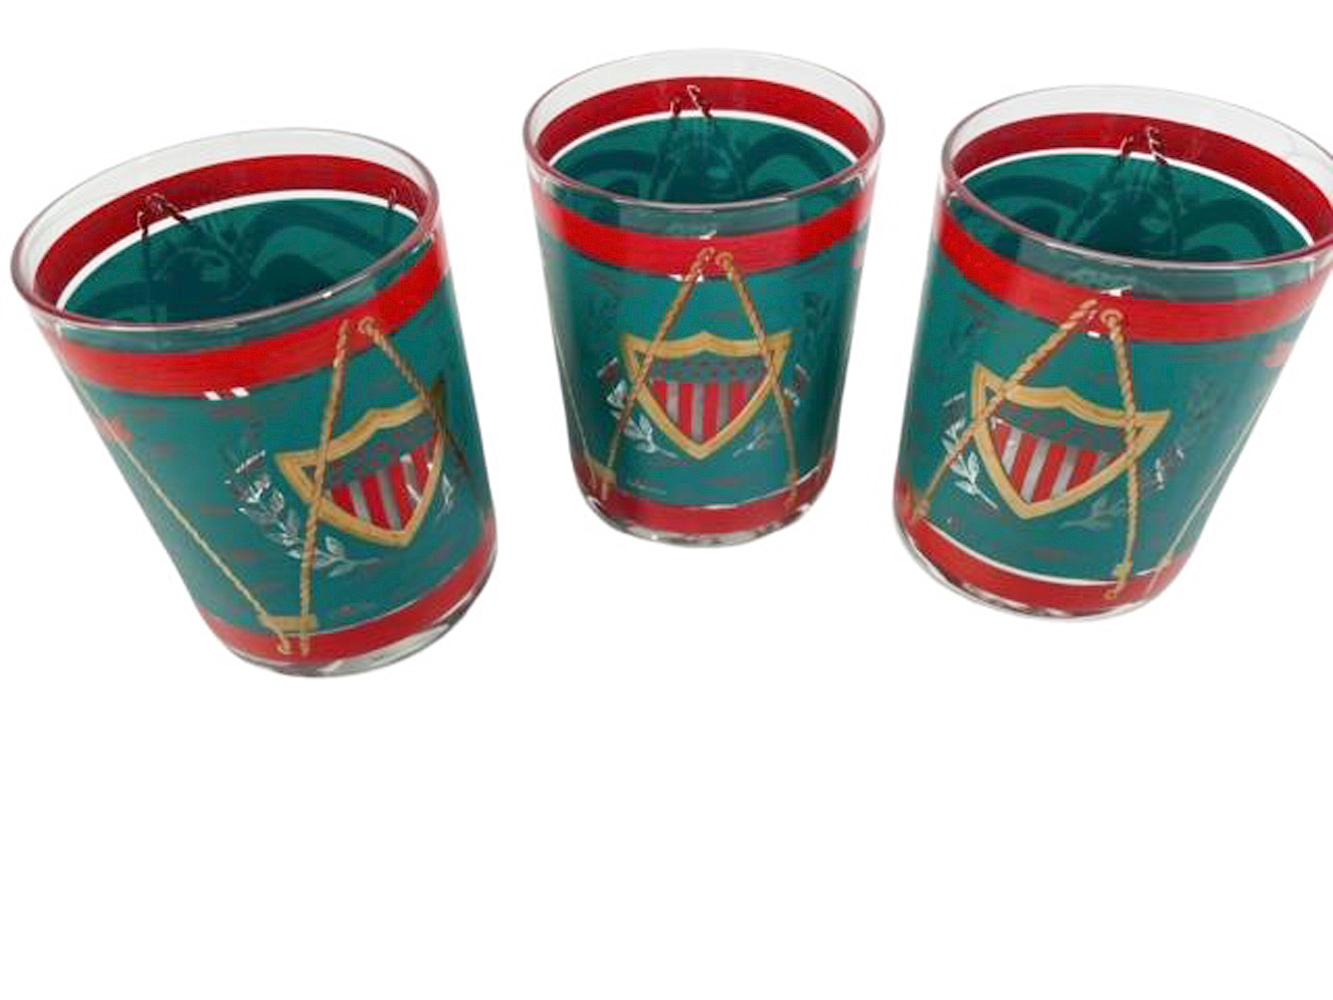 Four Vintage Cera Parade Drum Rocks Glasses with Eagle and Shield Design For Sale 5